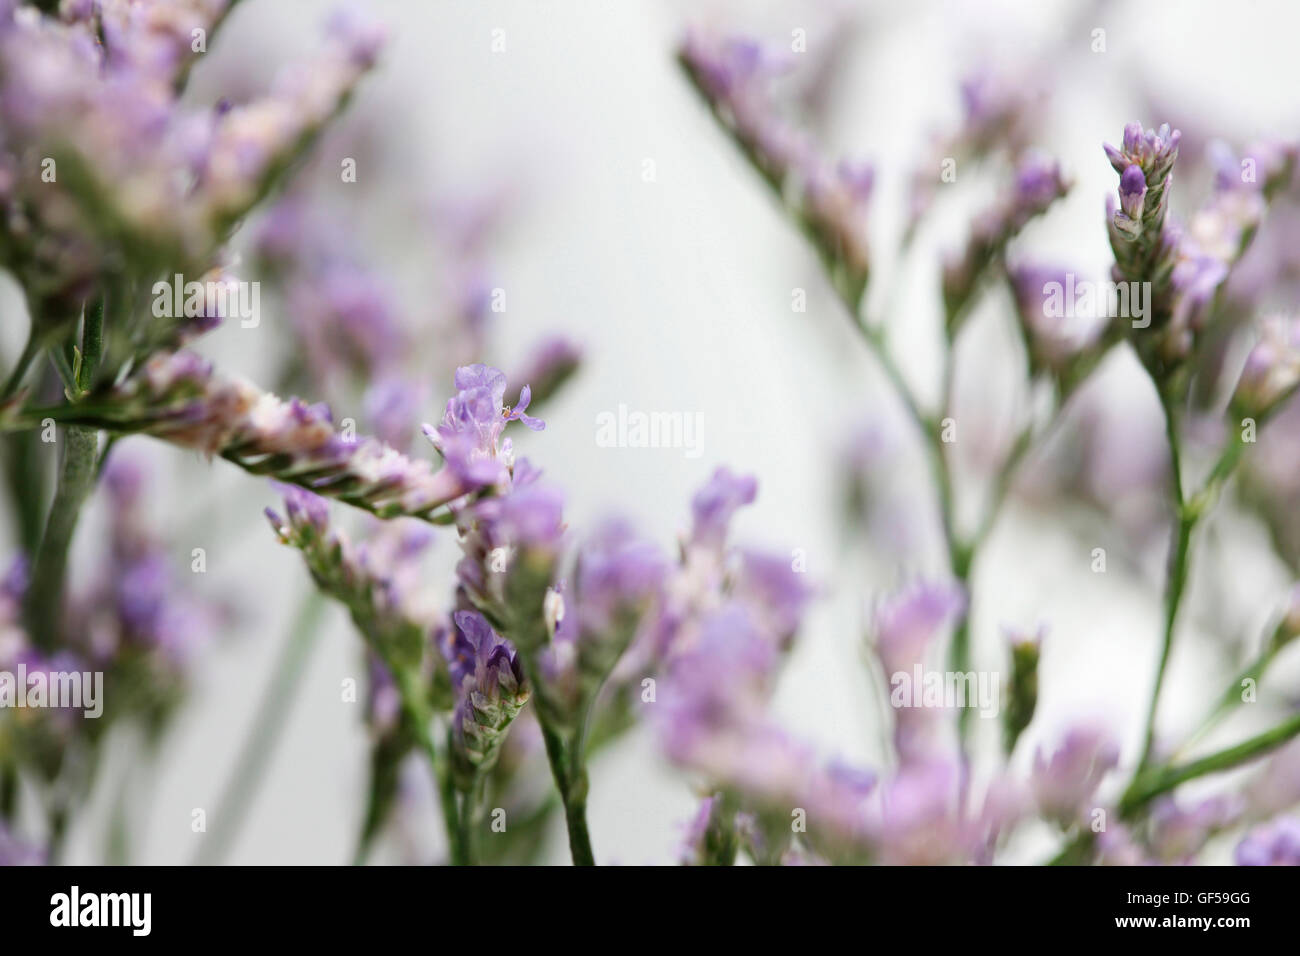 limonium overig maine blue, long-lived, violet meadow flower Jane Ann Butler Photography JABP1477 Stock Photo